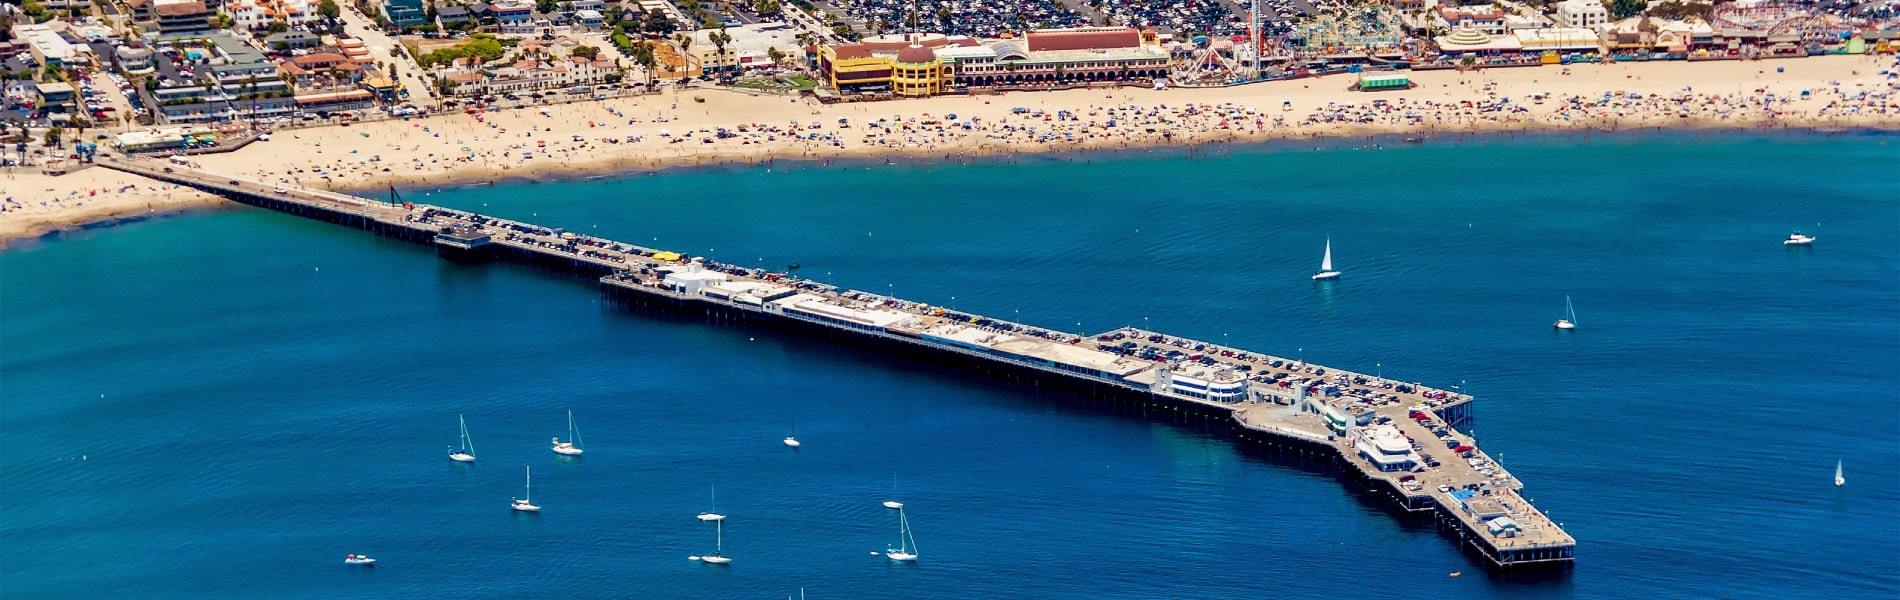 Aerial view of the iconic boardwalk and beach in Santa Cruz, California